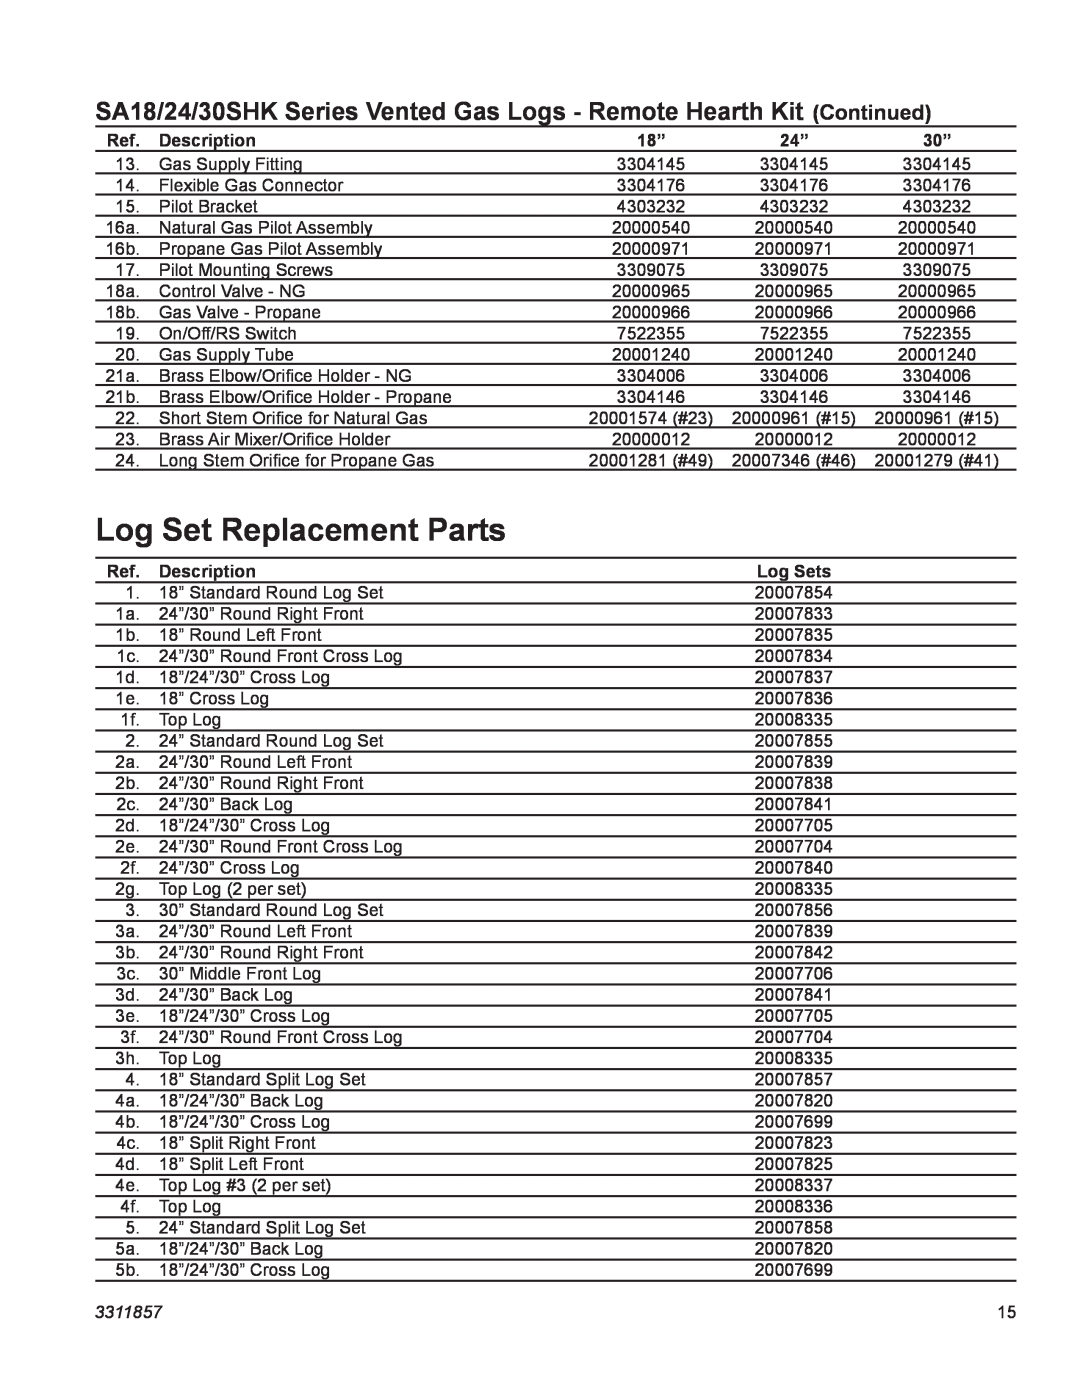 Vermont Casting SA18SHKRN, SA24SKHRN, SA24SHKRP, SA18SHKRP manual Log Set Replacement Parts, Description, Log Sets, 3311857 